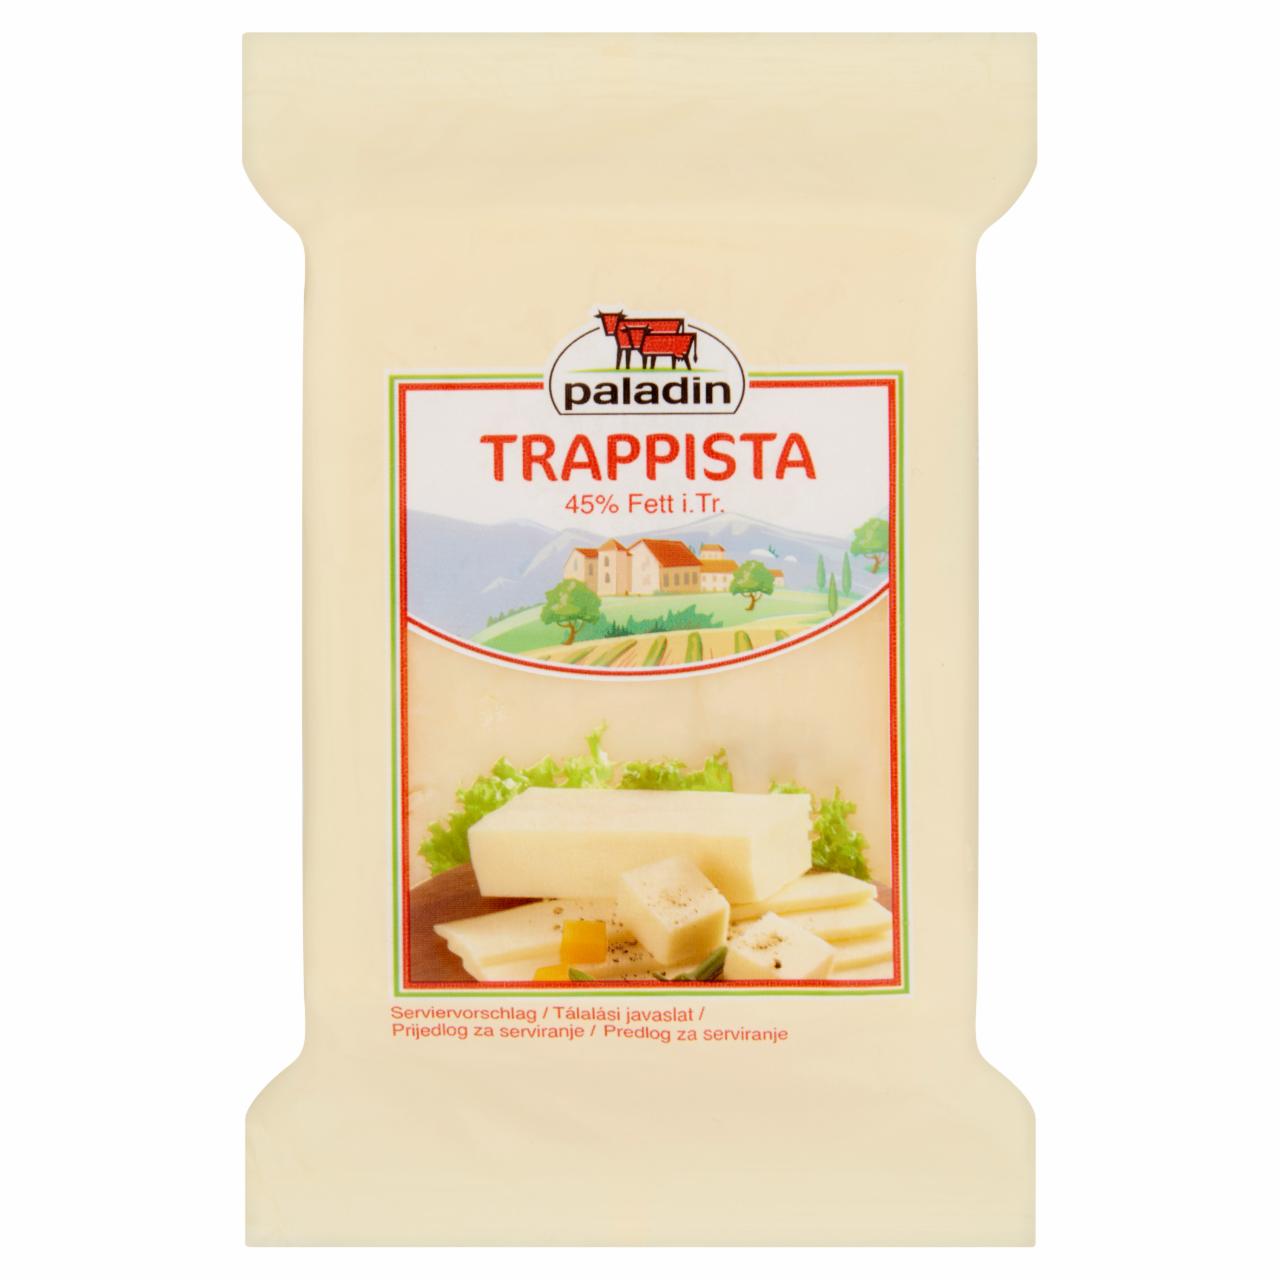 Képek - Paladin trappista félkemény, zsíros sajt 200 g